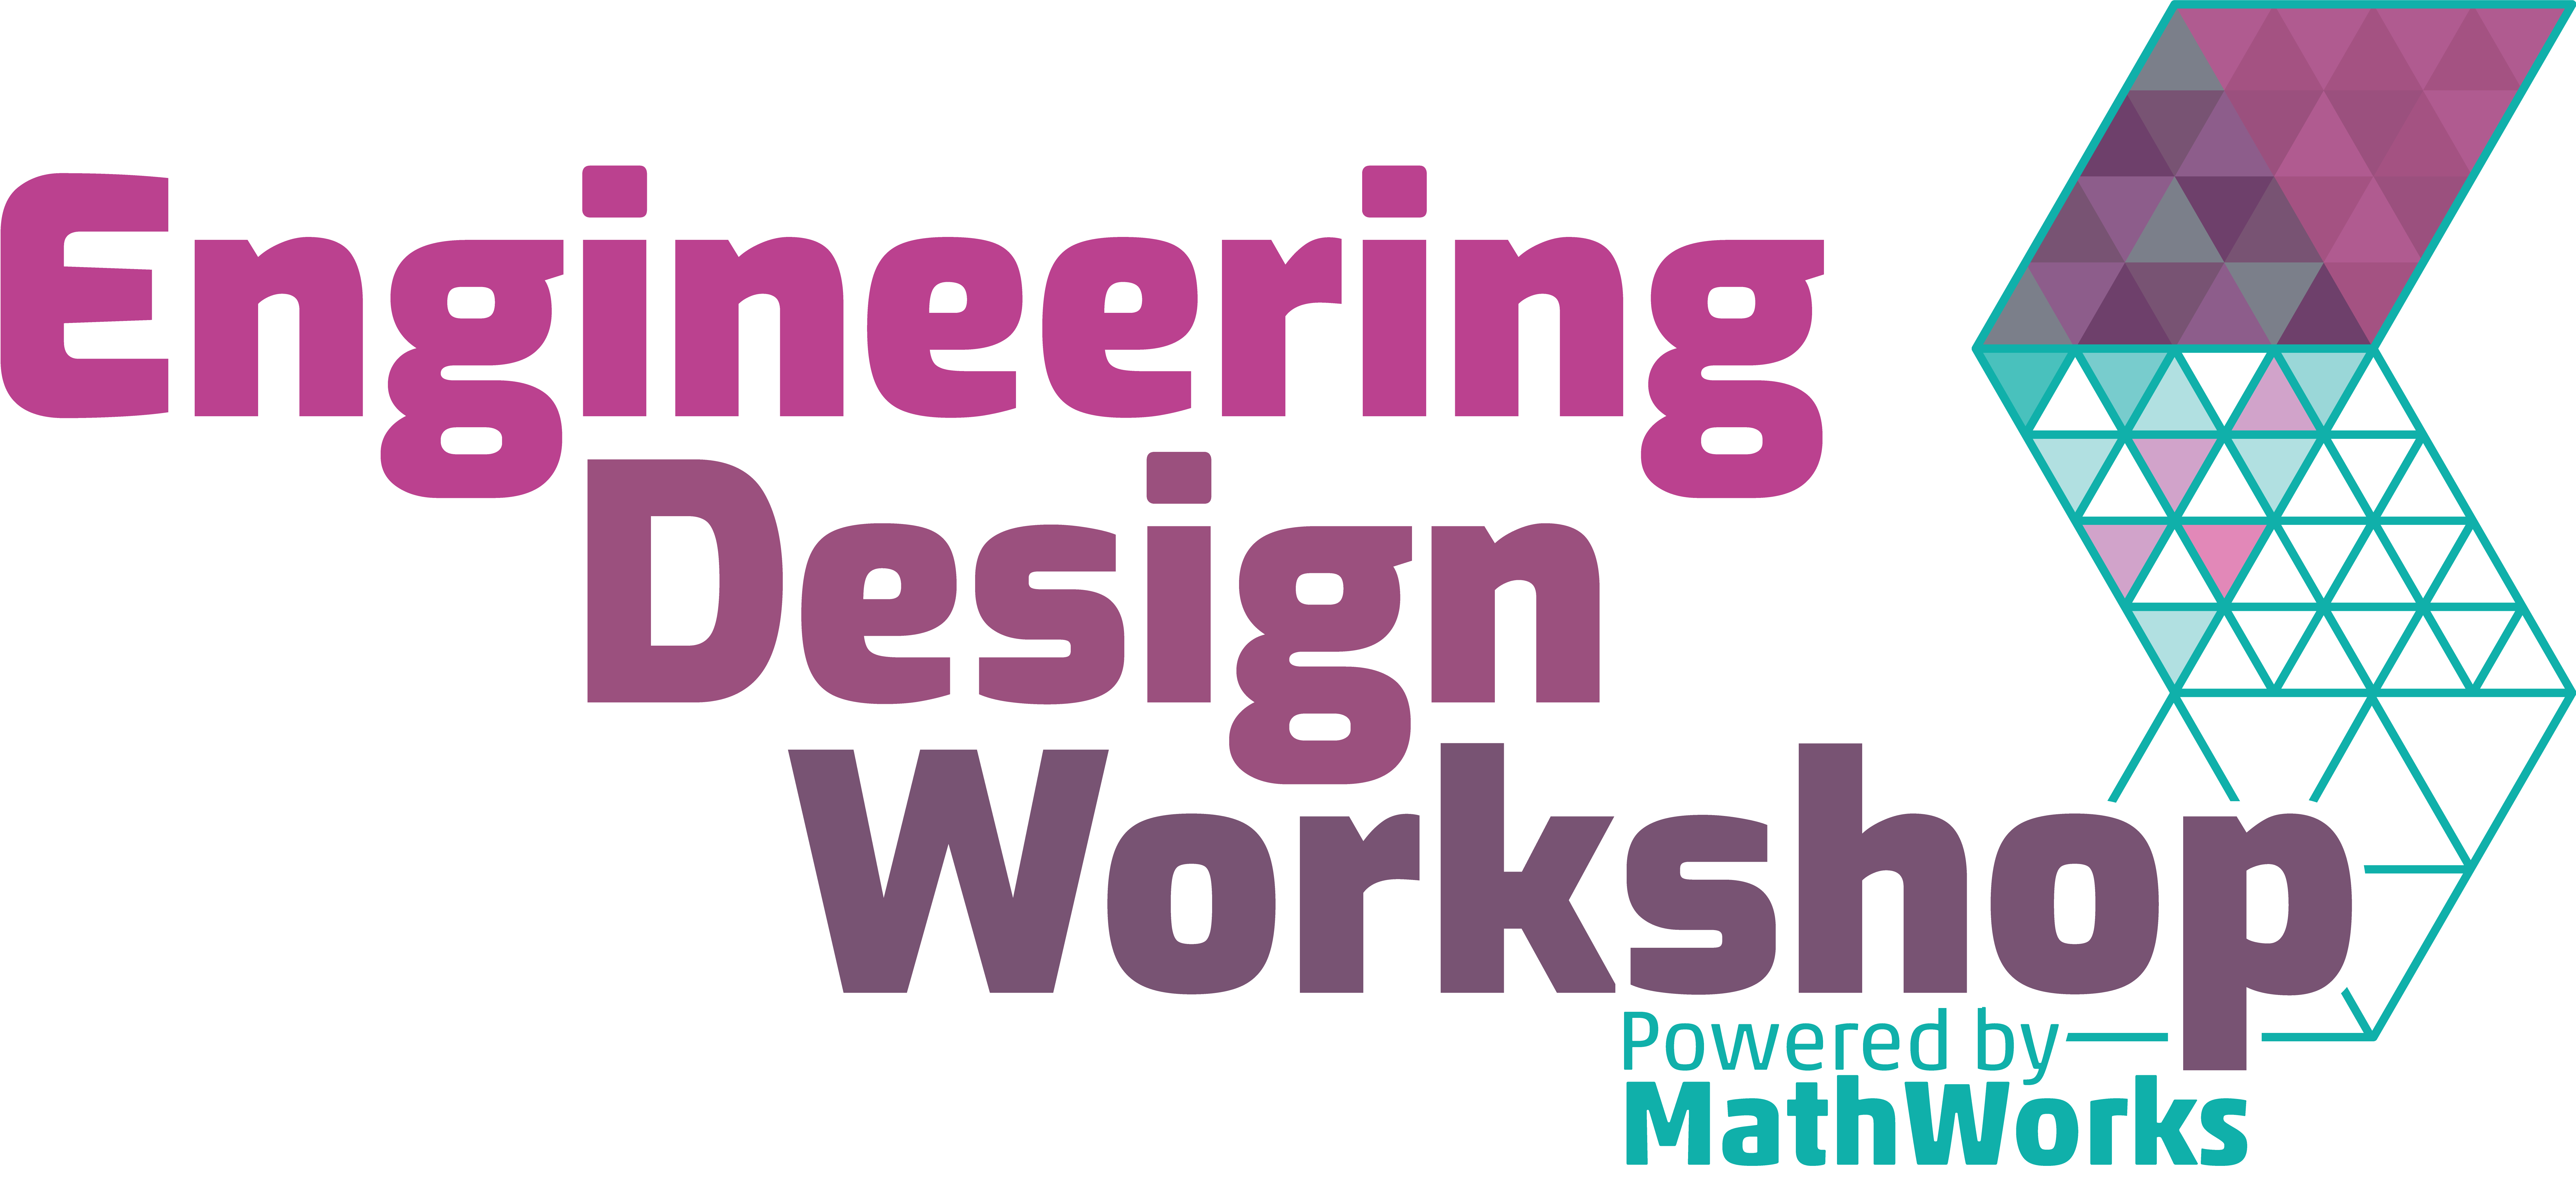 Engineering Design Workshop logo